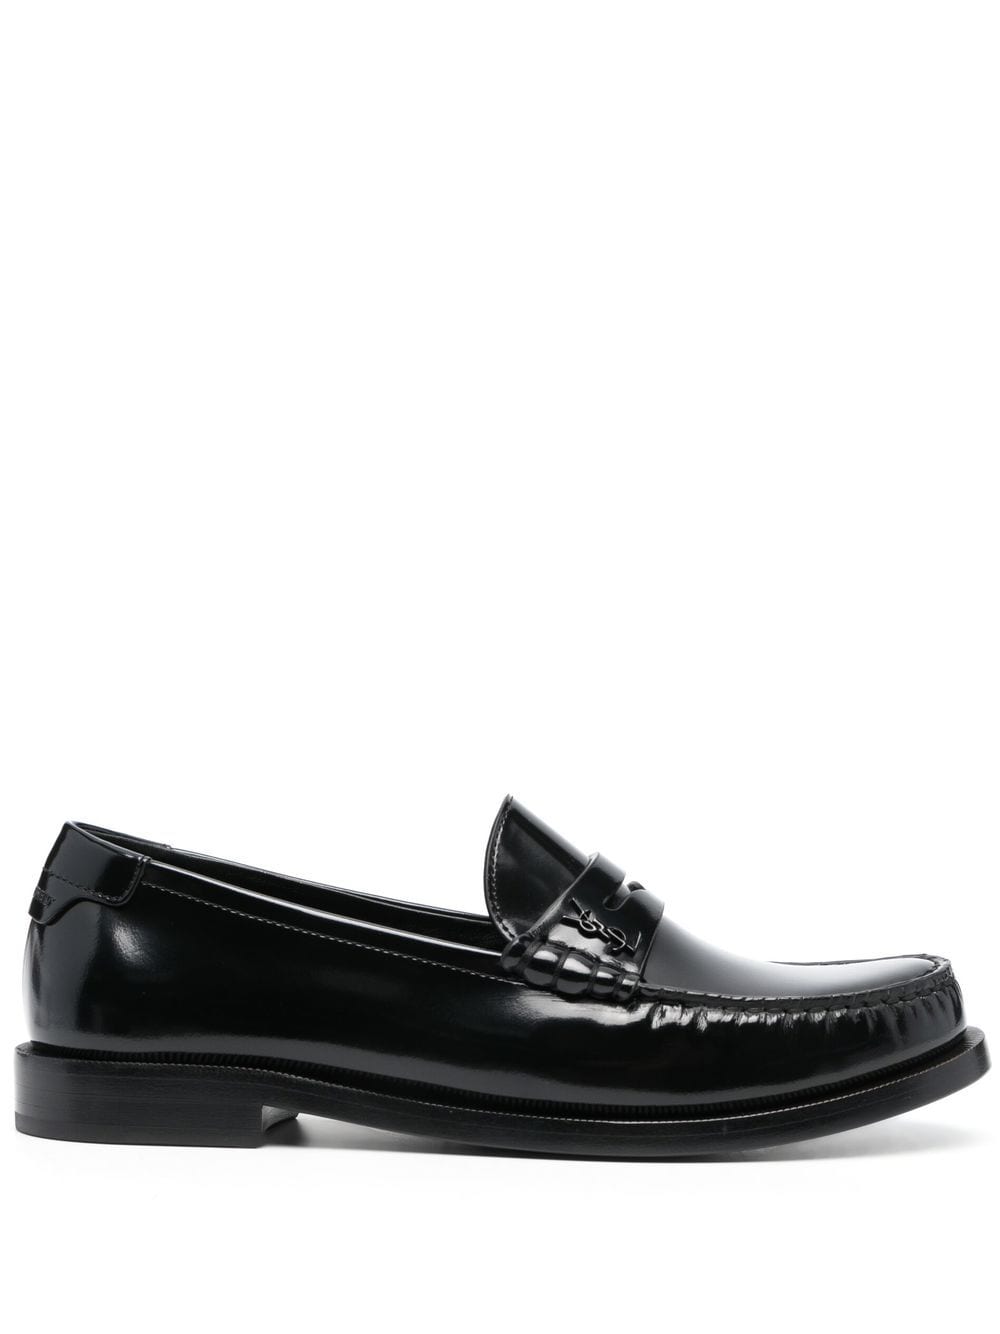 Saint Laurent patent leather loafers Black